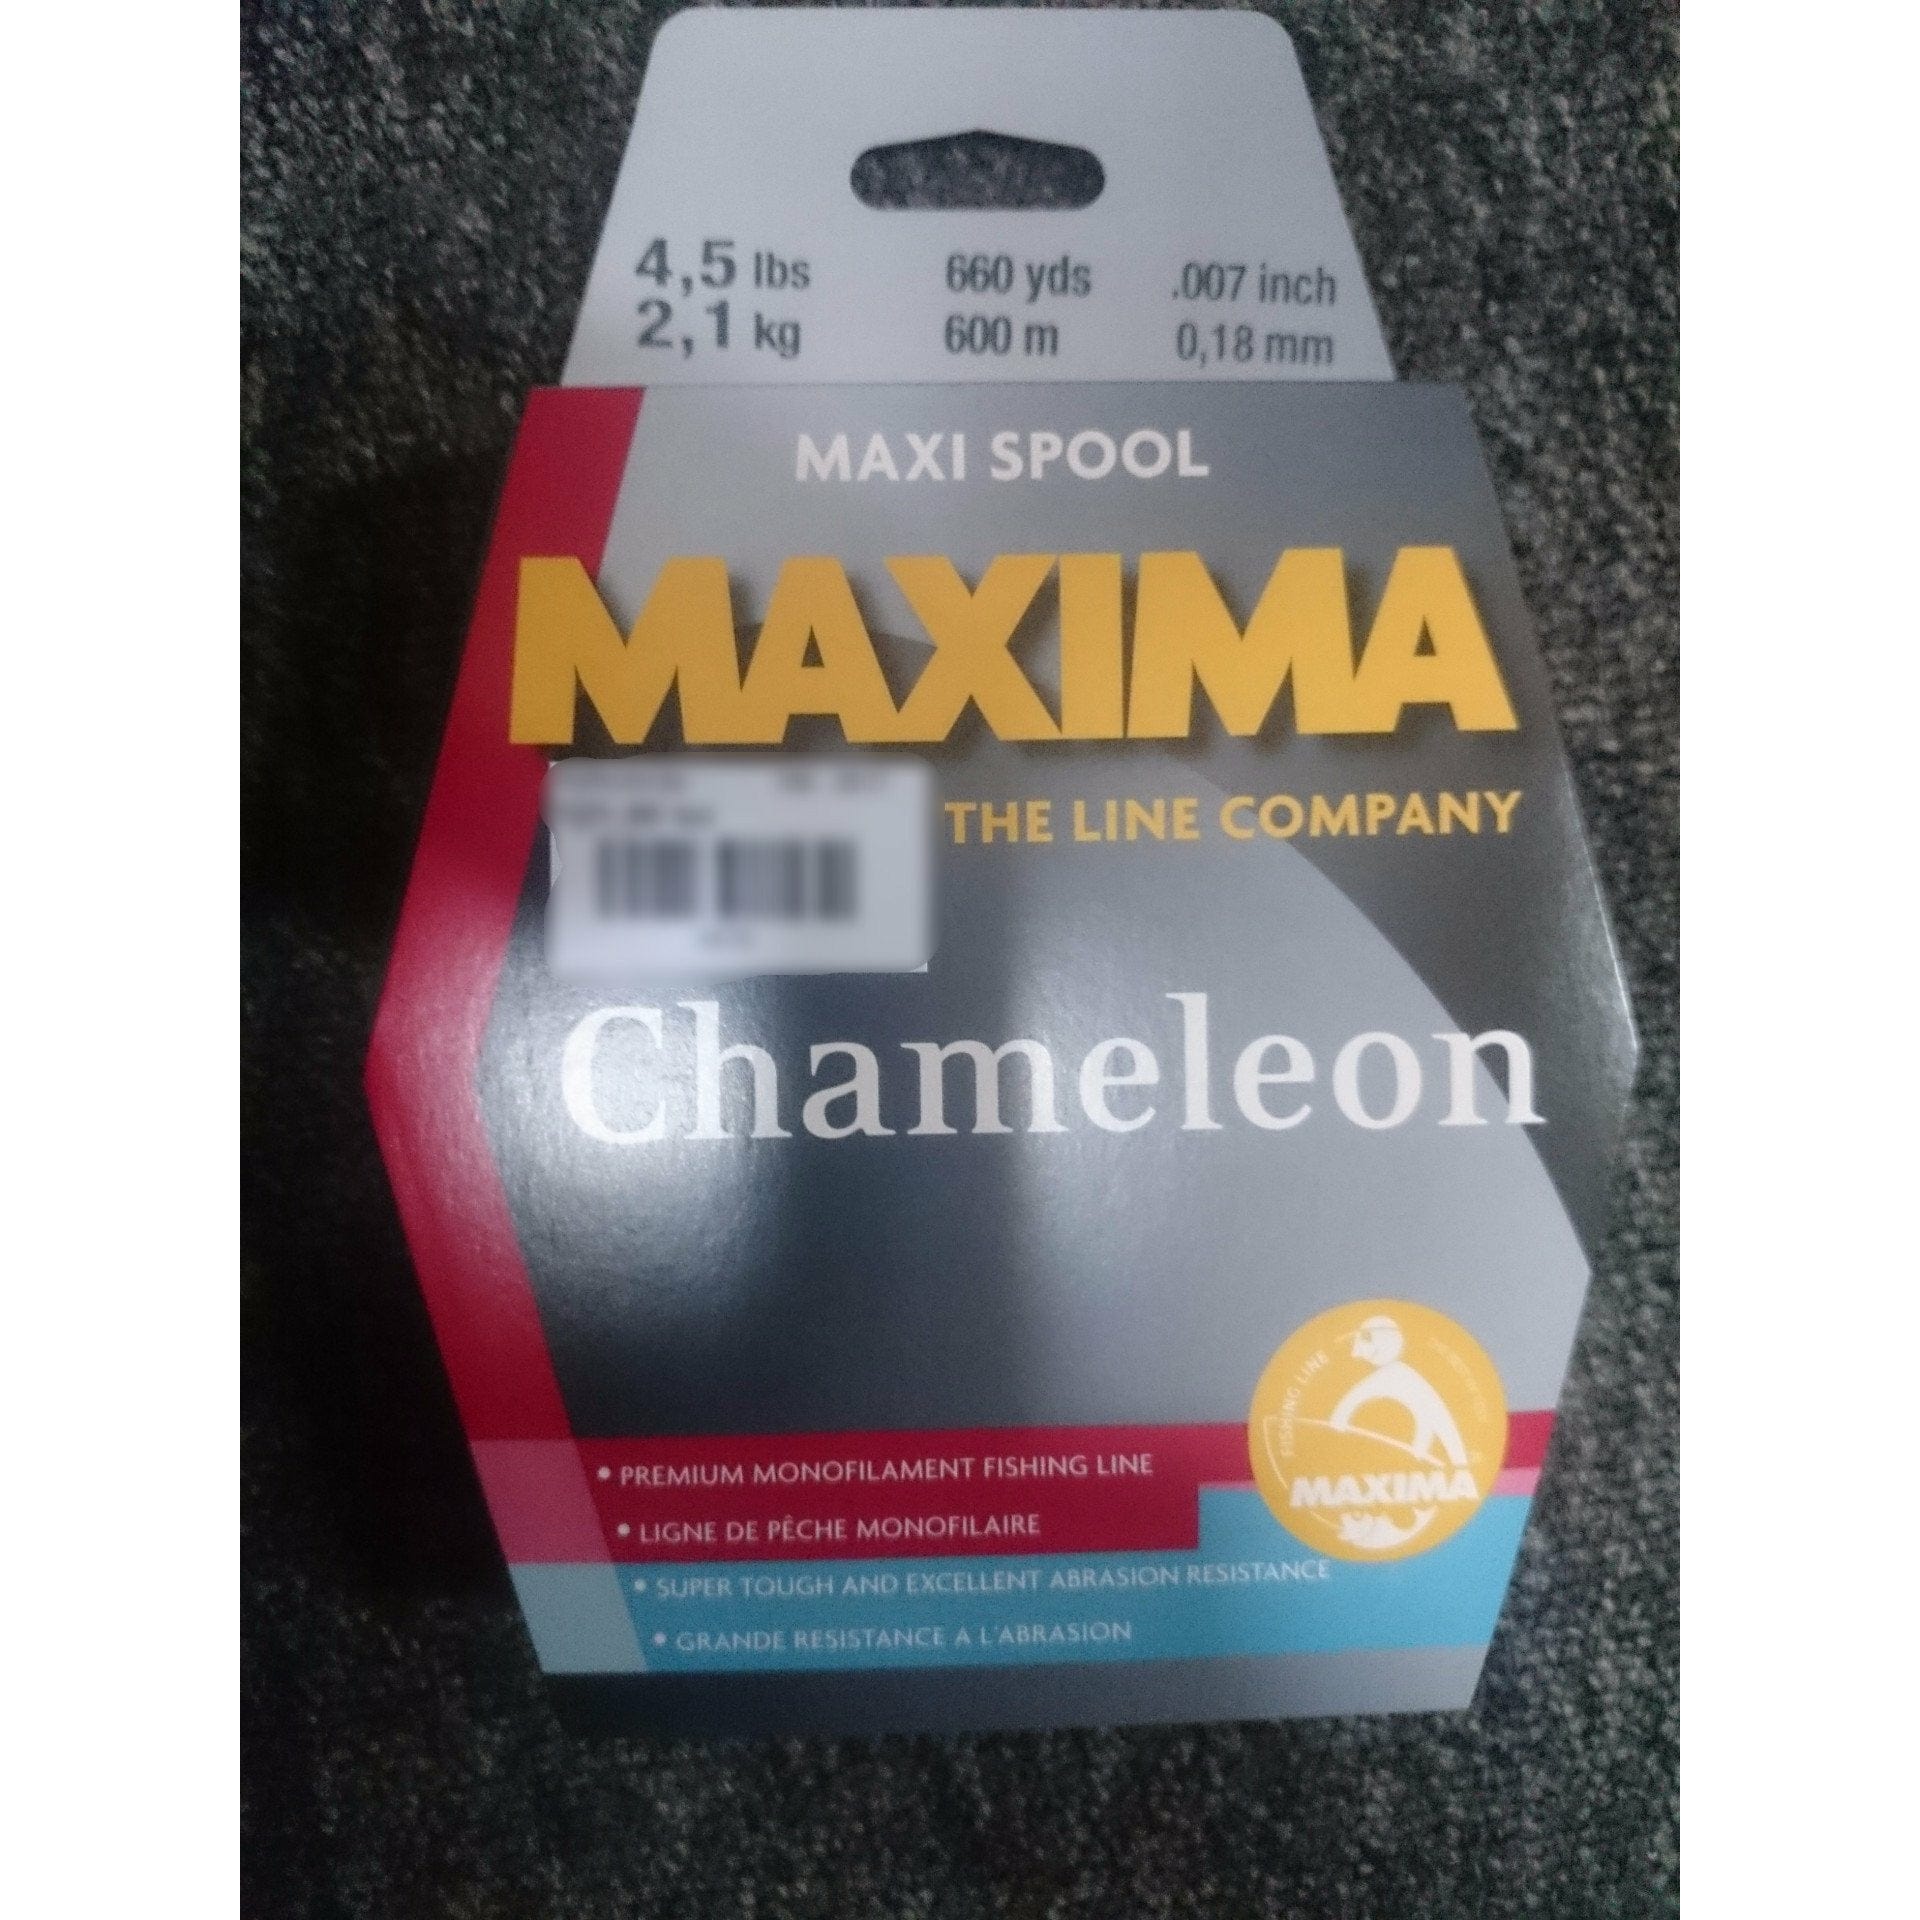 MAXIMA Maxi Spool Chameleon 2.1kg / 600m / 0.18mm - MatchFishing